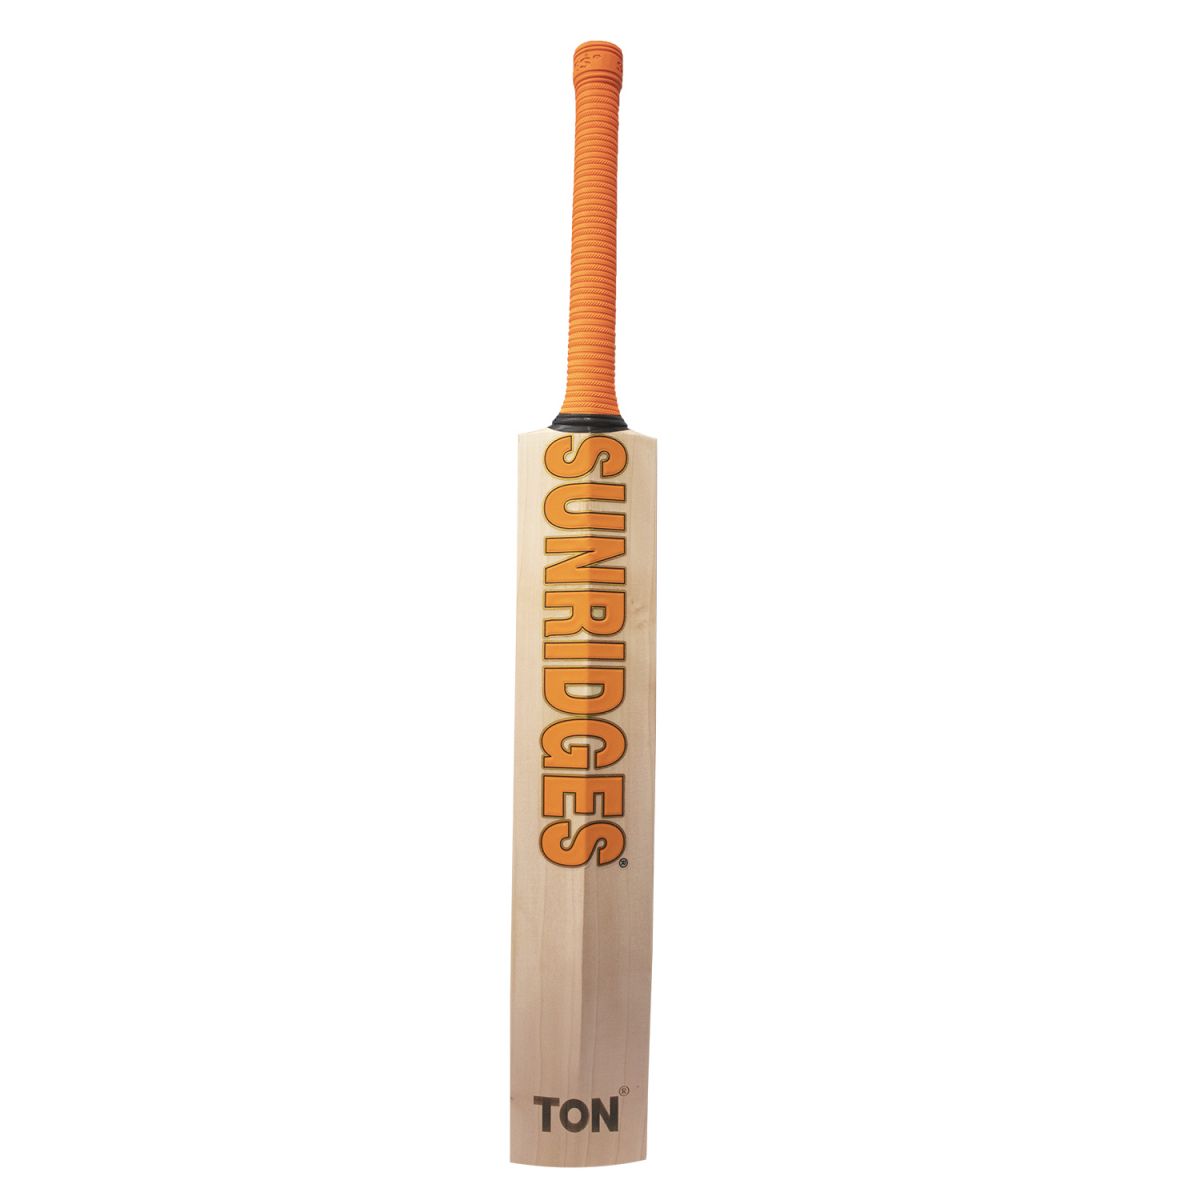 SS Cricket Bat Ton Retro Ultimate